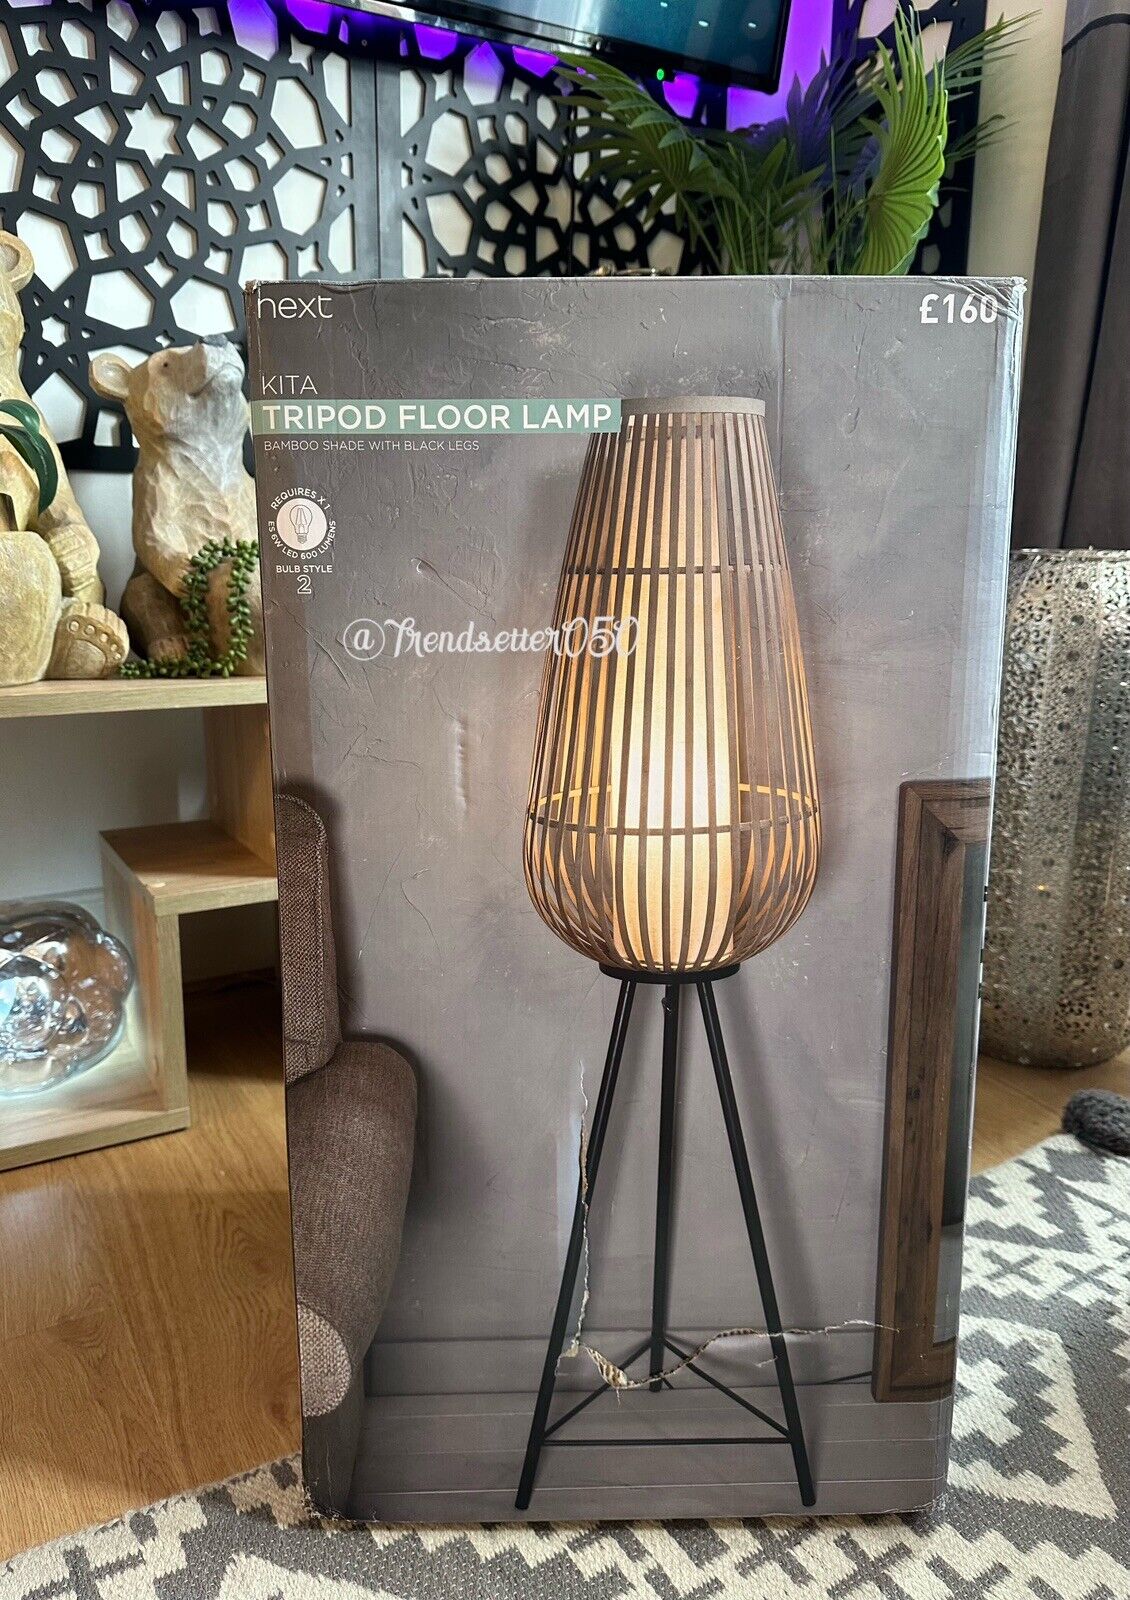 70% Off Deal Next Kita Tripod Floor Lamp Bamboo Shade Black Leg Home Decor £160